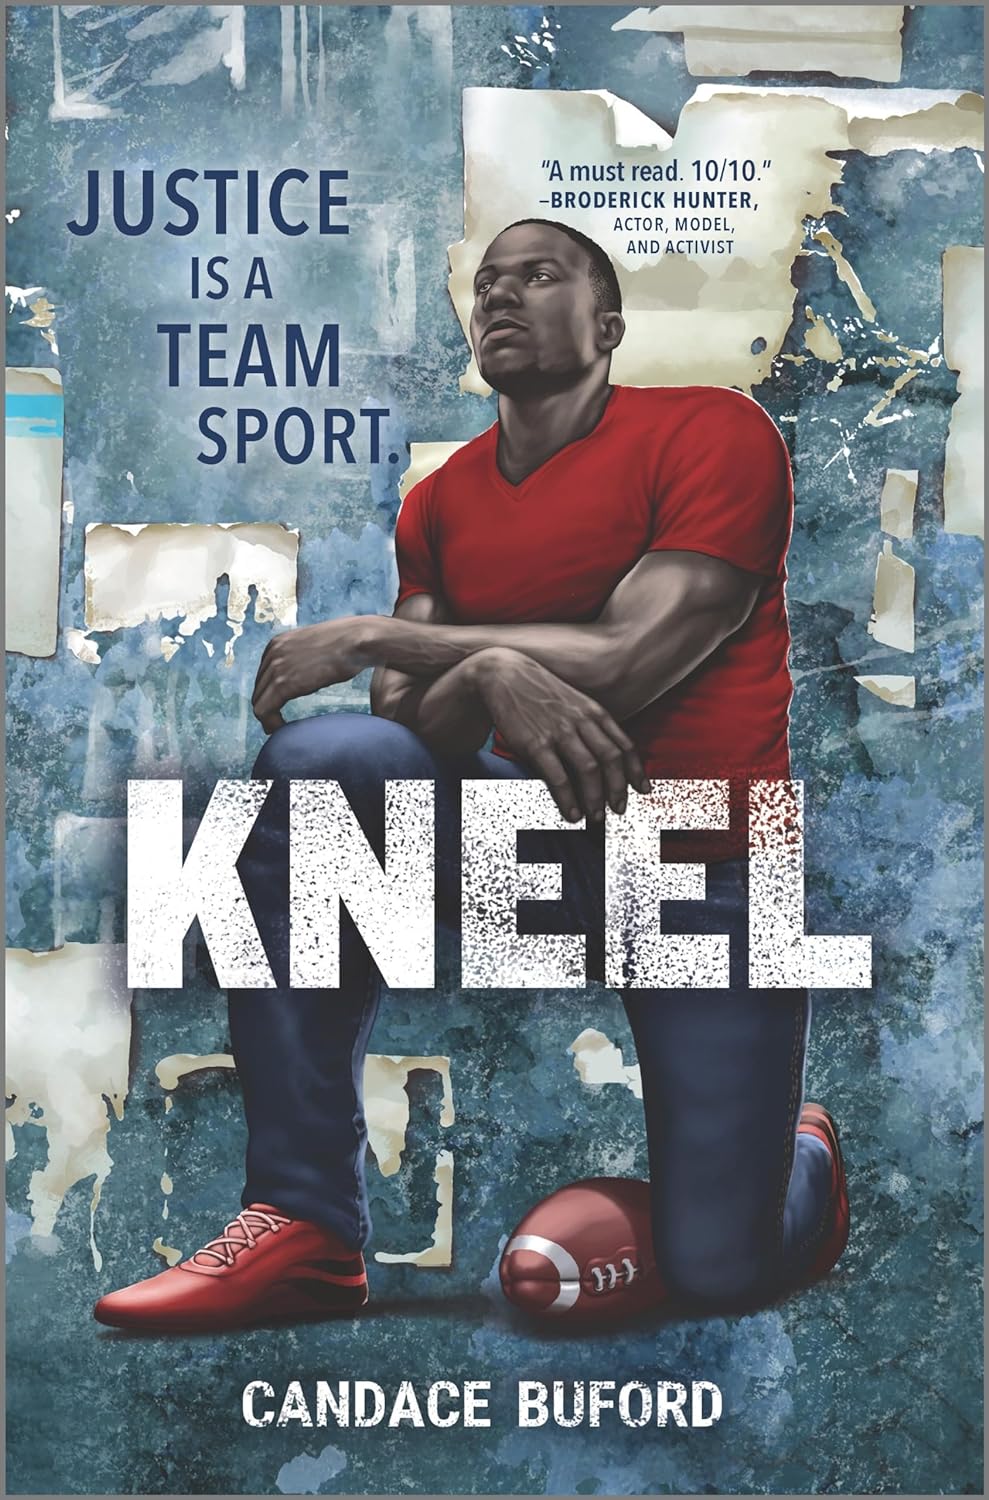 Image for "Kneel"